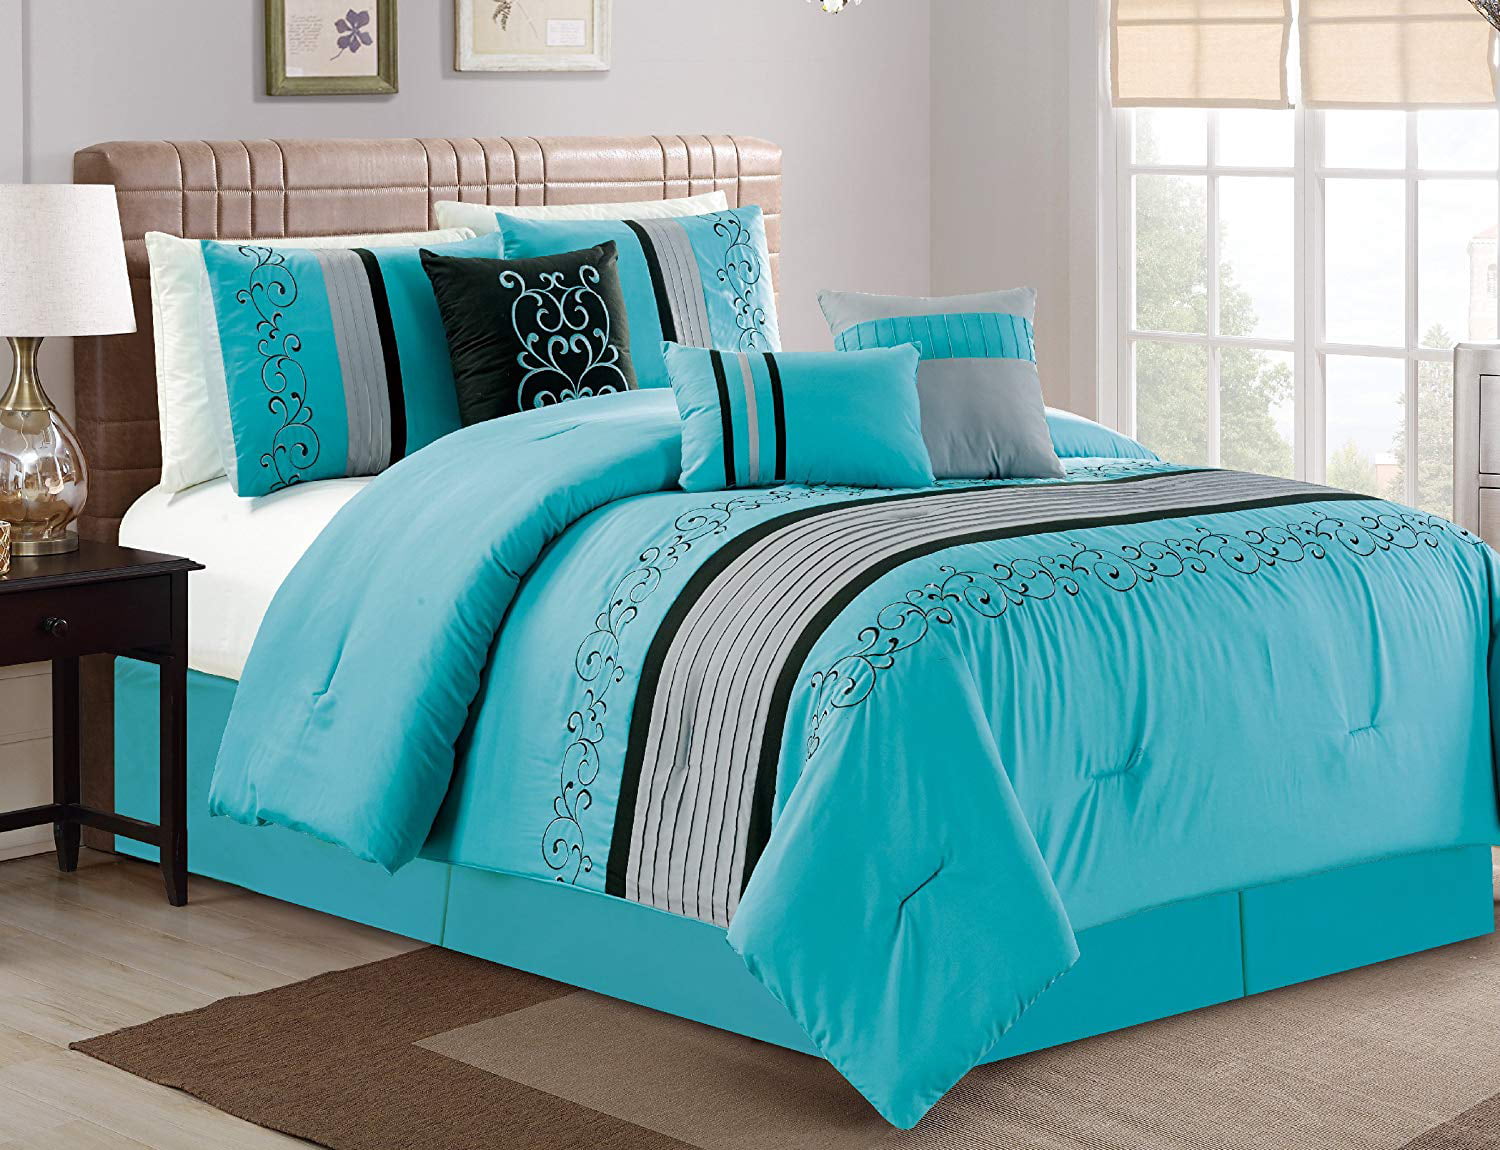 HGMart Bedding Comforter Set Bed In A Bag 7 Piece Luxury Embroidery Microfiber Bedding Sets